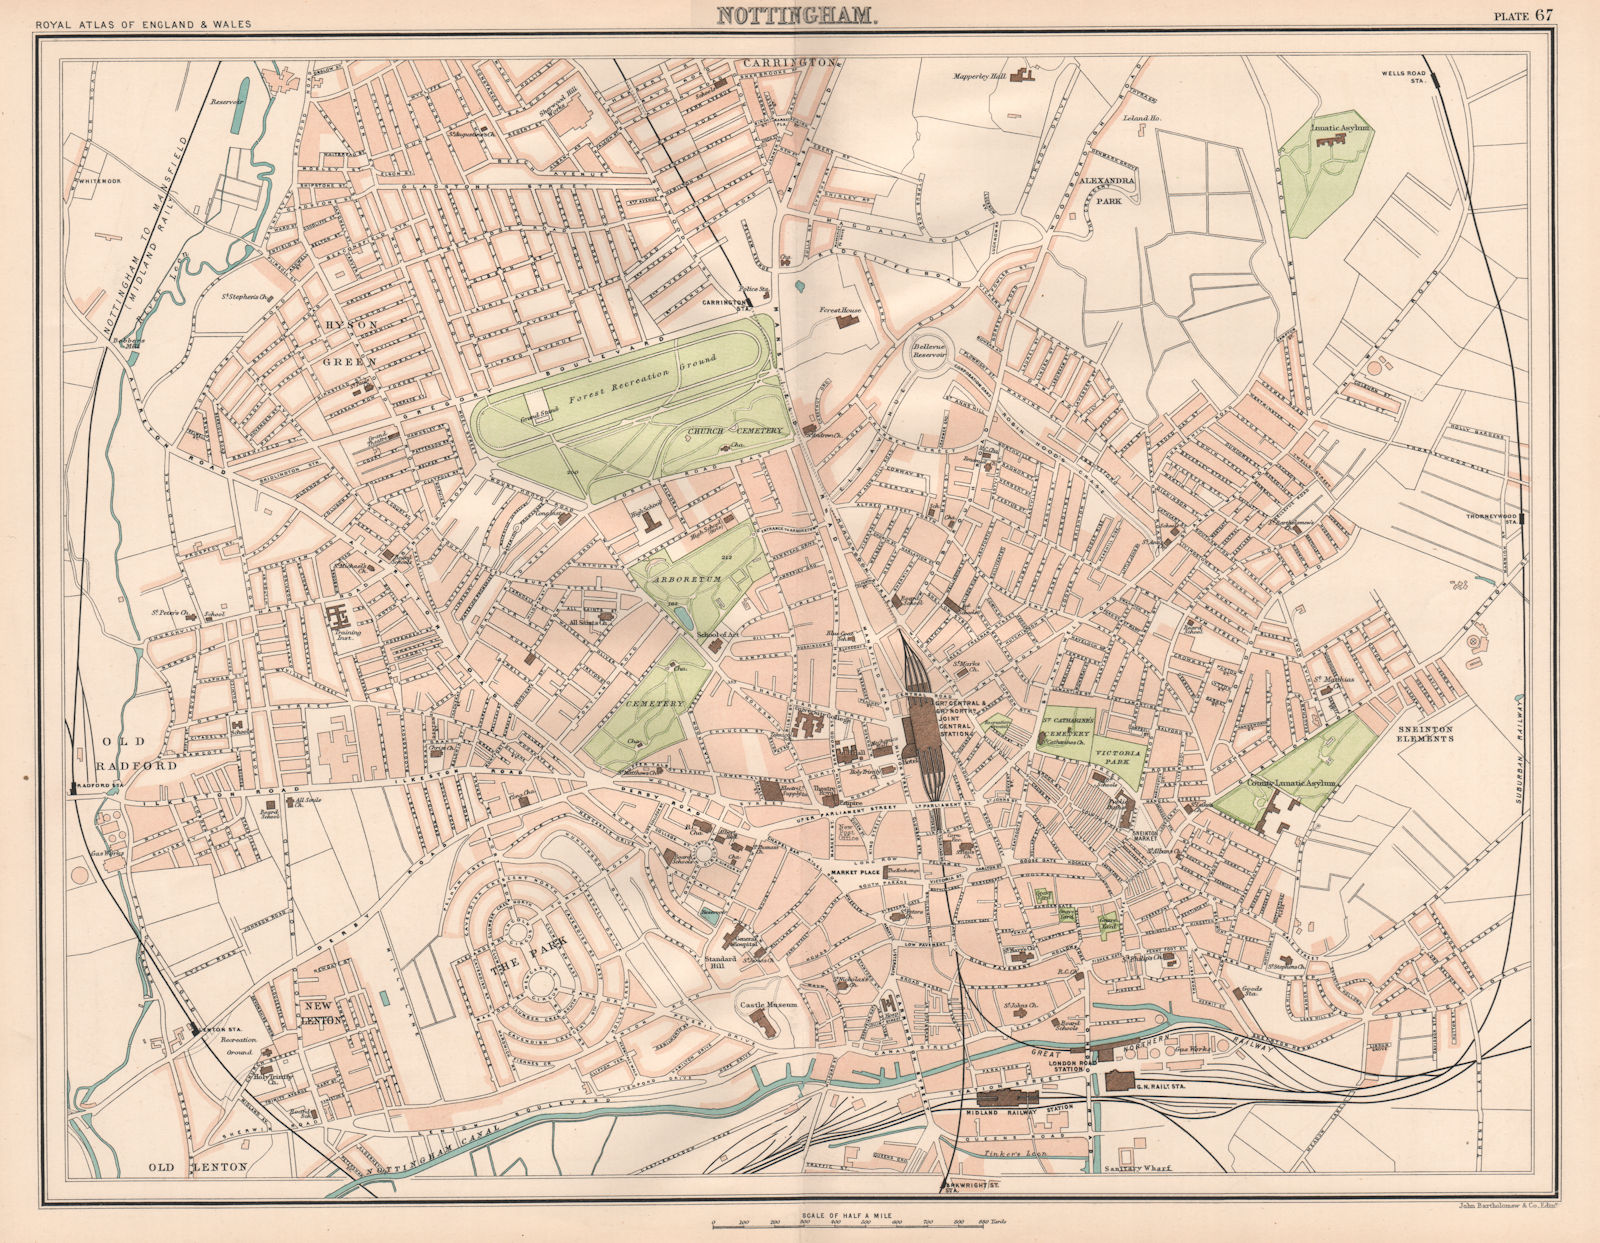 Associate Product NOTTINGHAM antique town city plan. BARTHOLOMEW 1898 old map chart